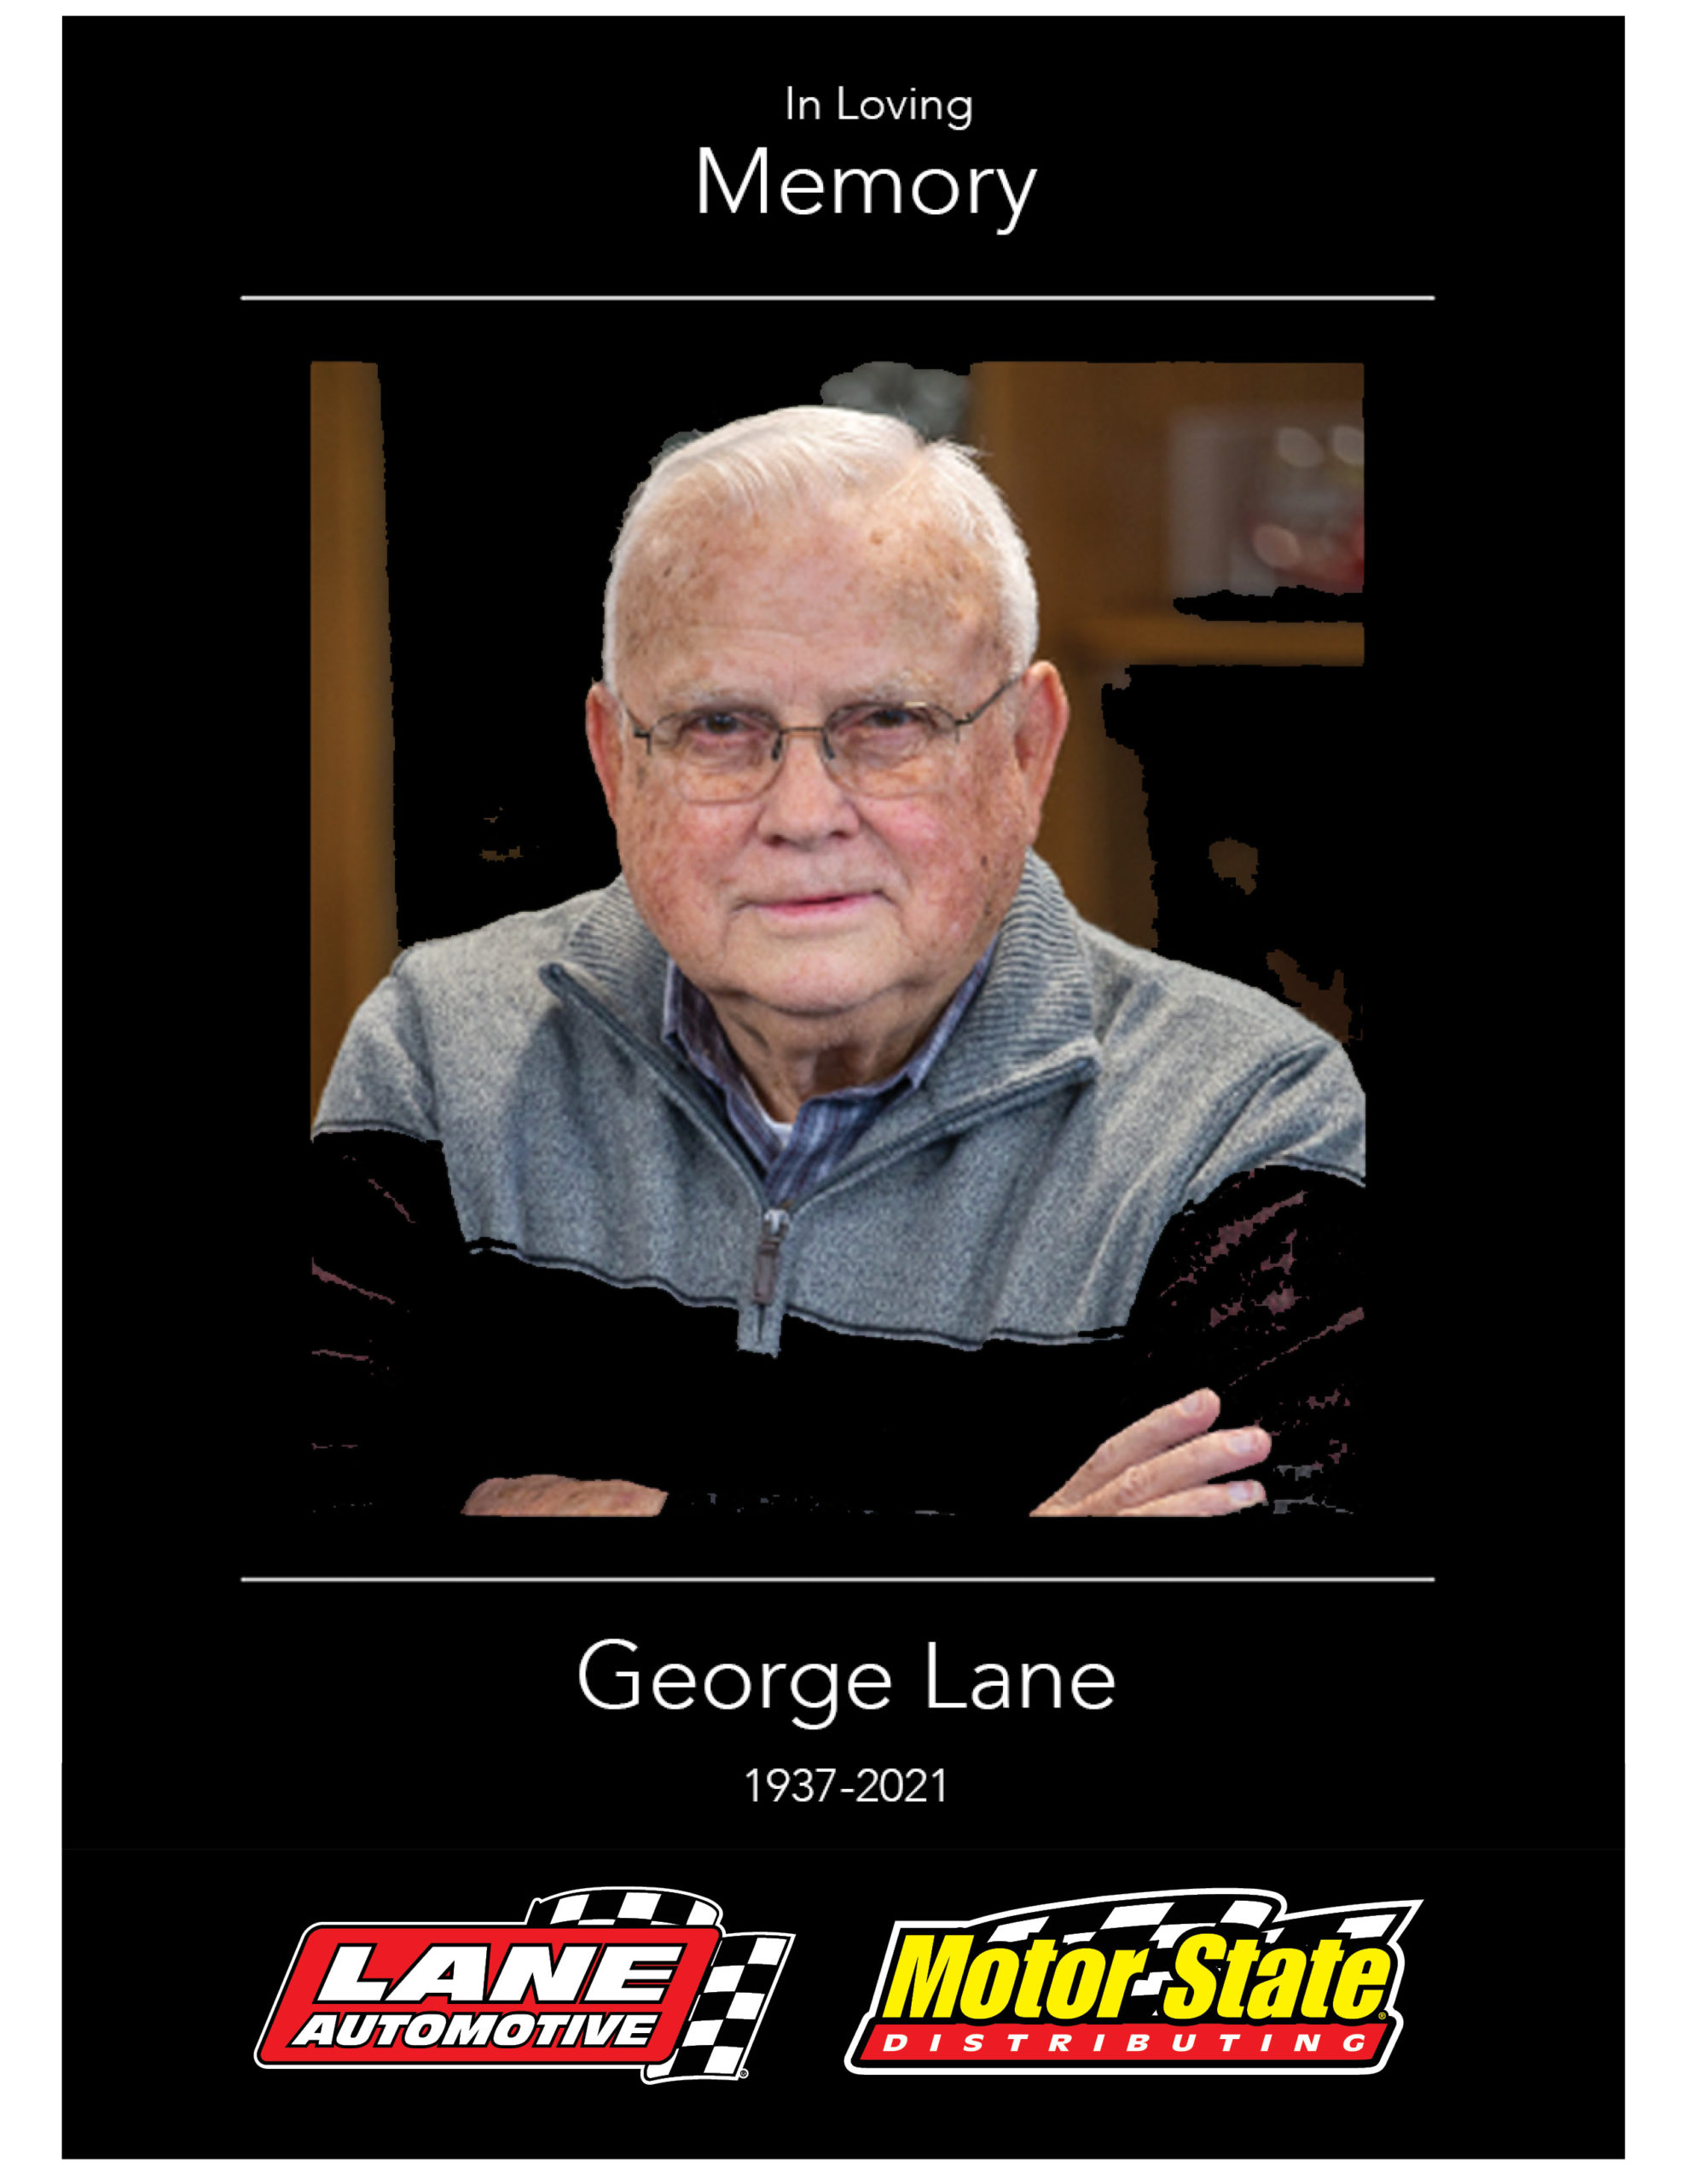 George Lane